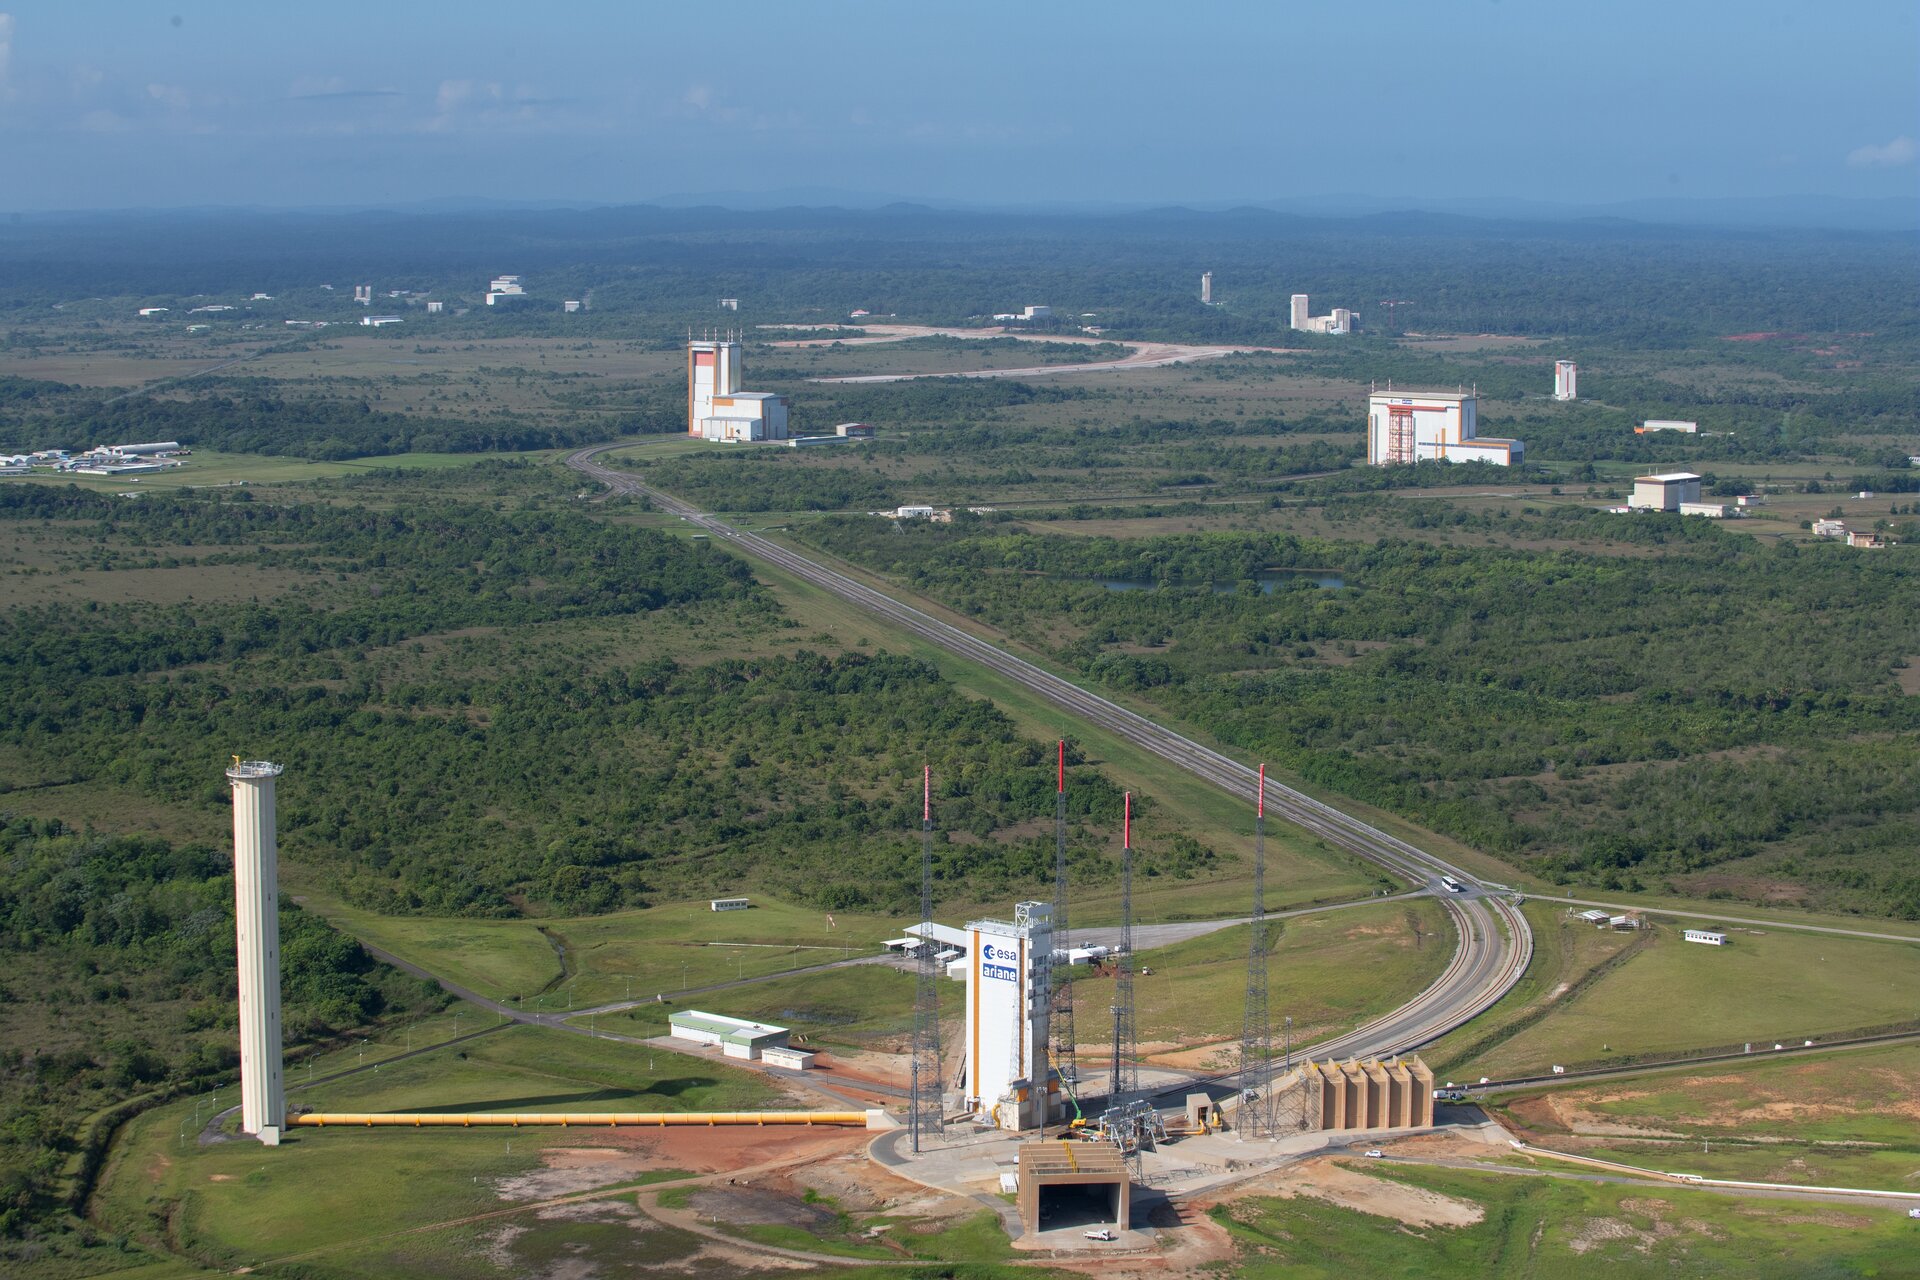 Europe's Spaceport in Kourou, French Guiana